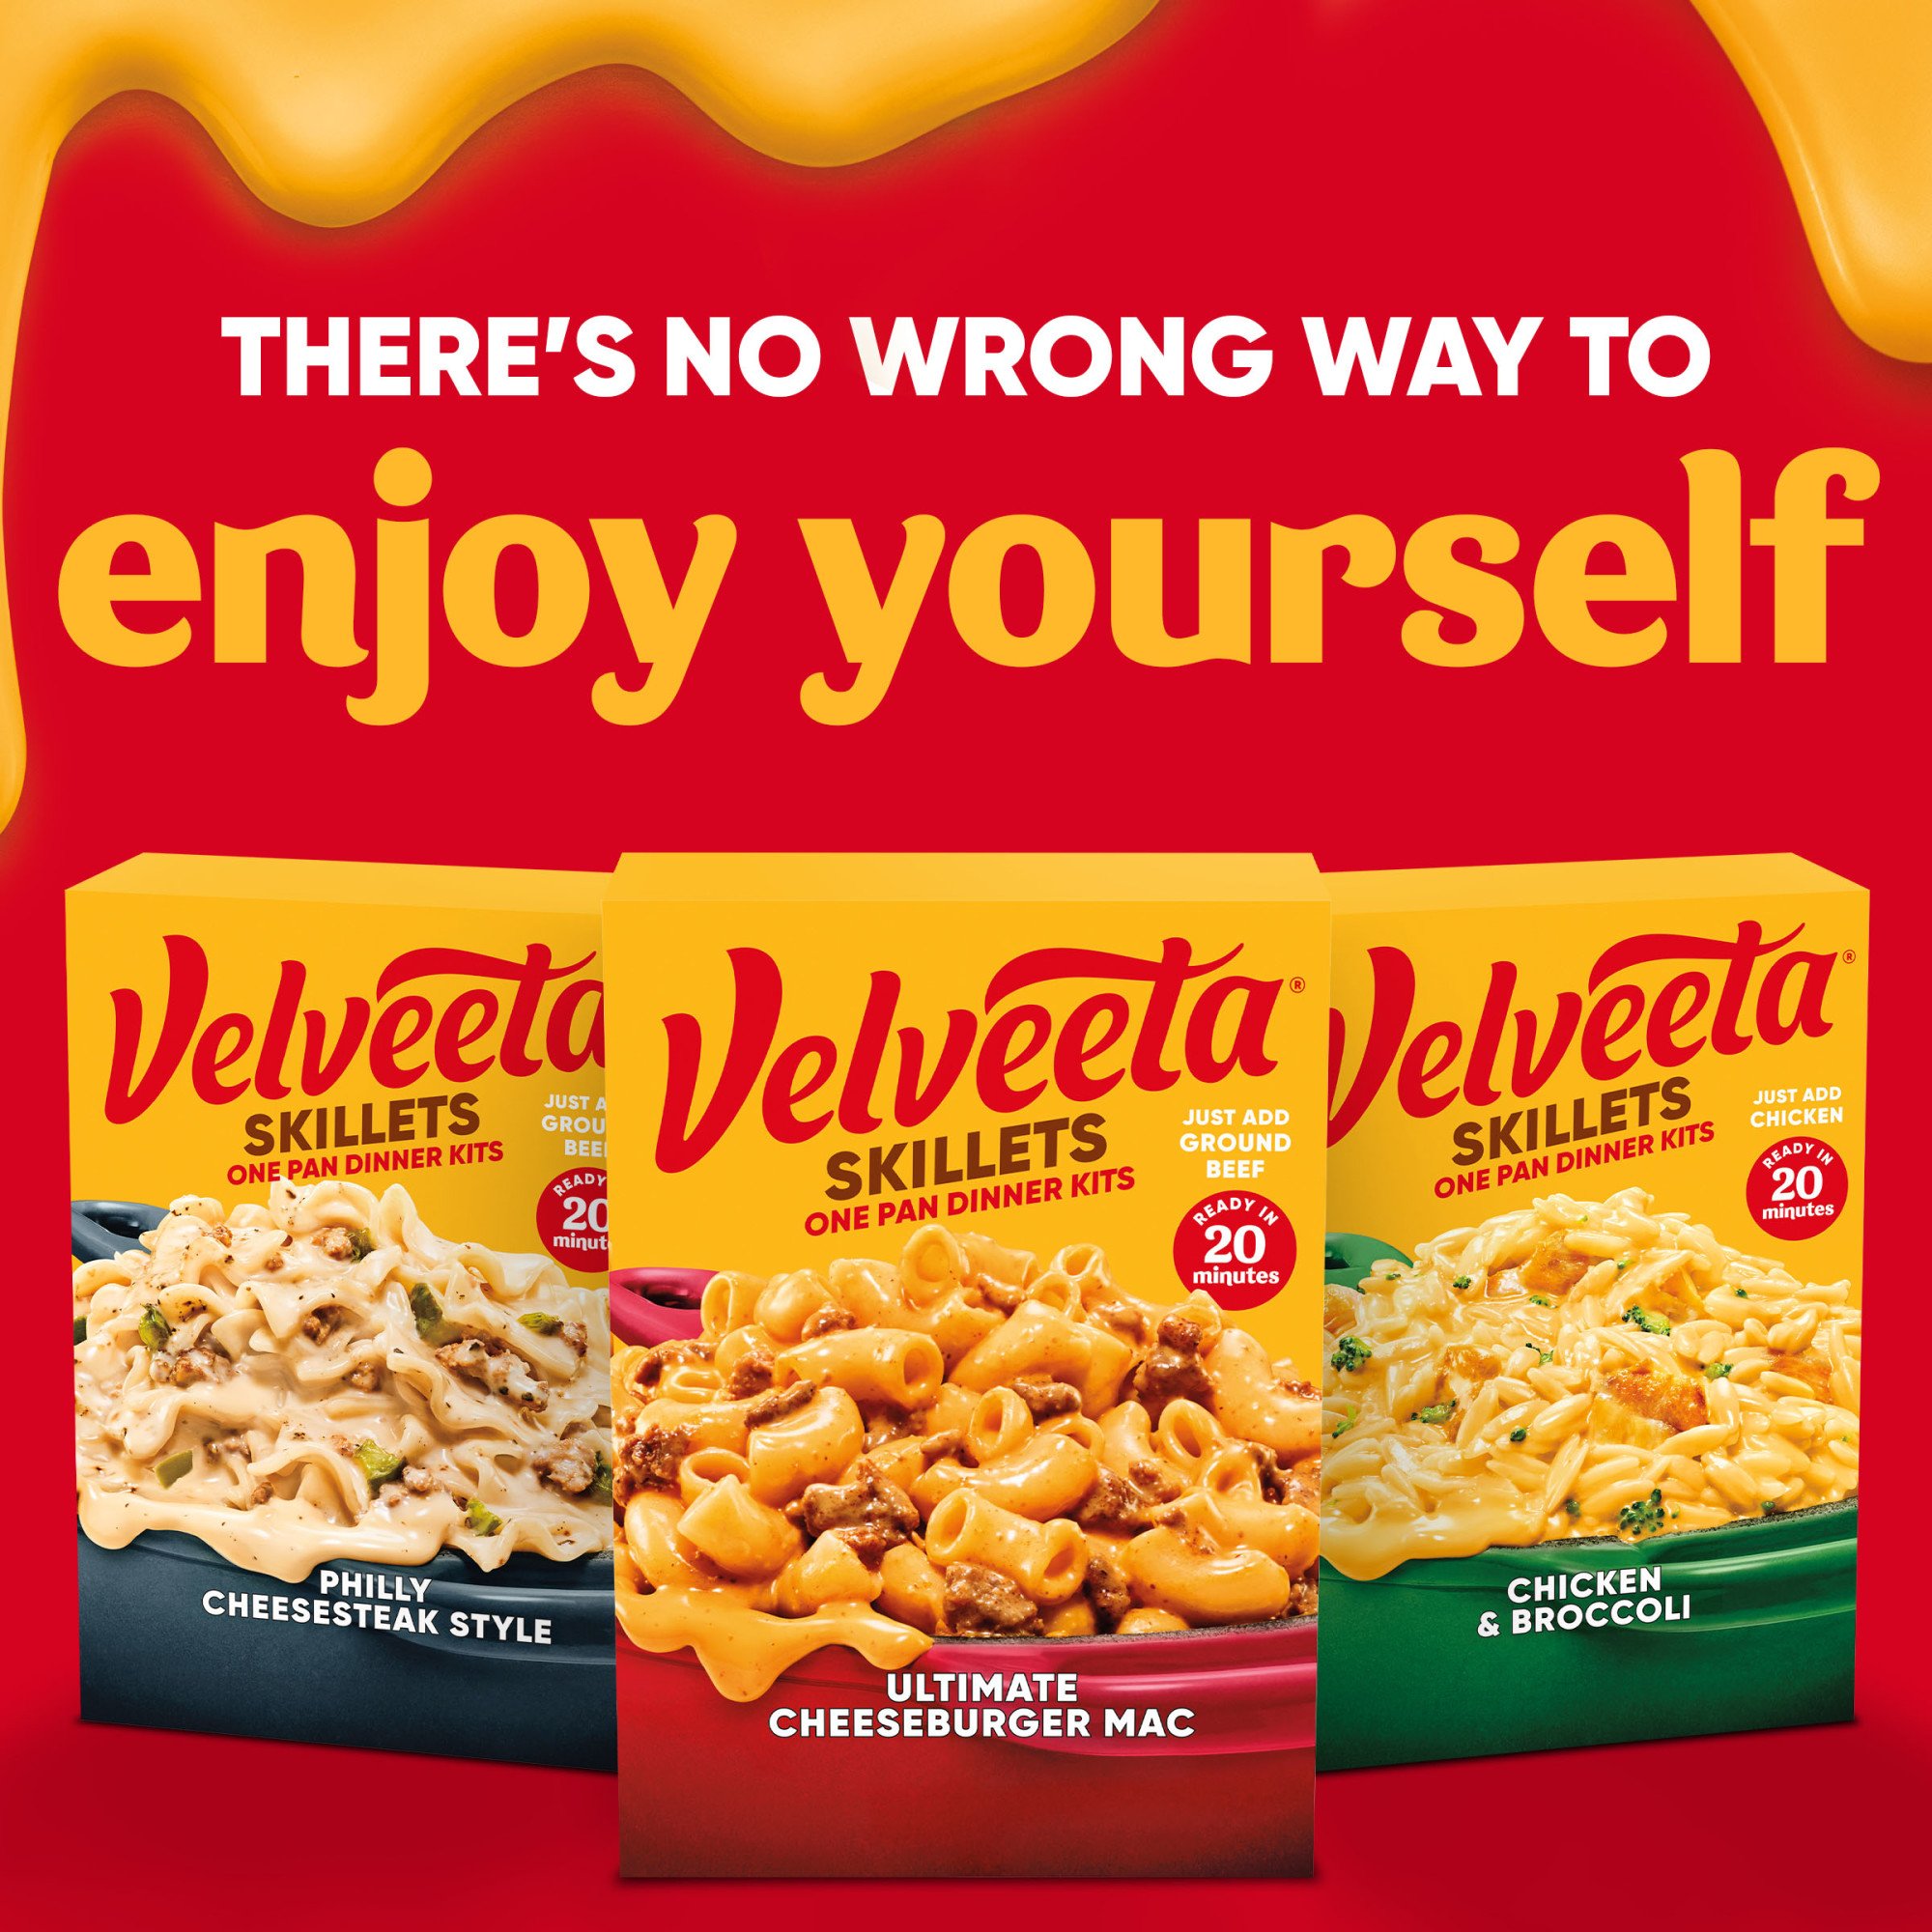 Velveeta Original Shells & Cheese Big Cup - Shop Pantry Meals at H-E-B